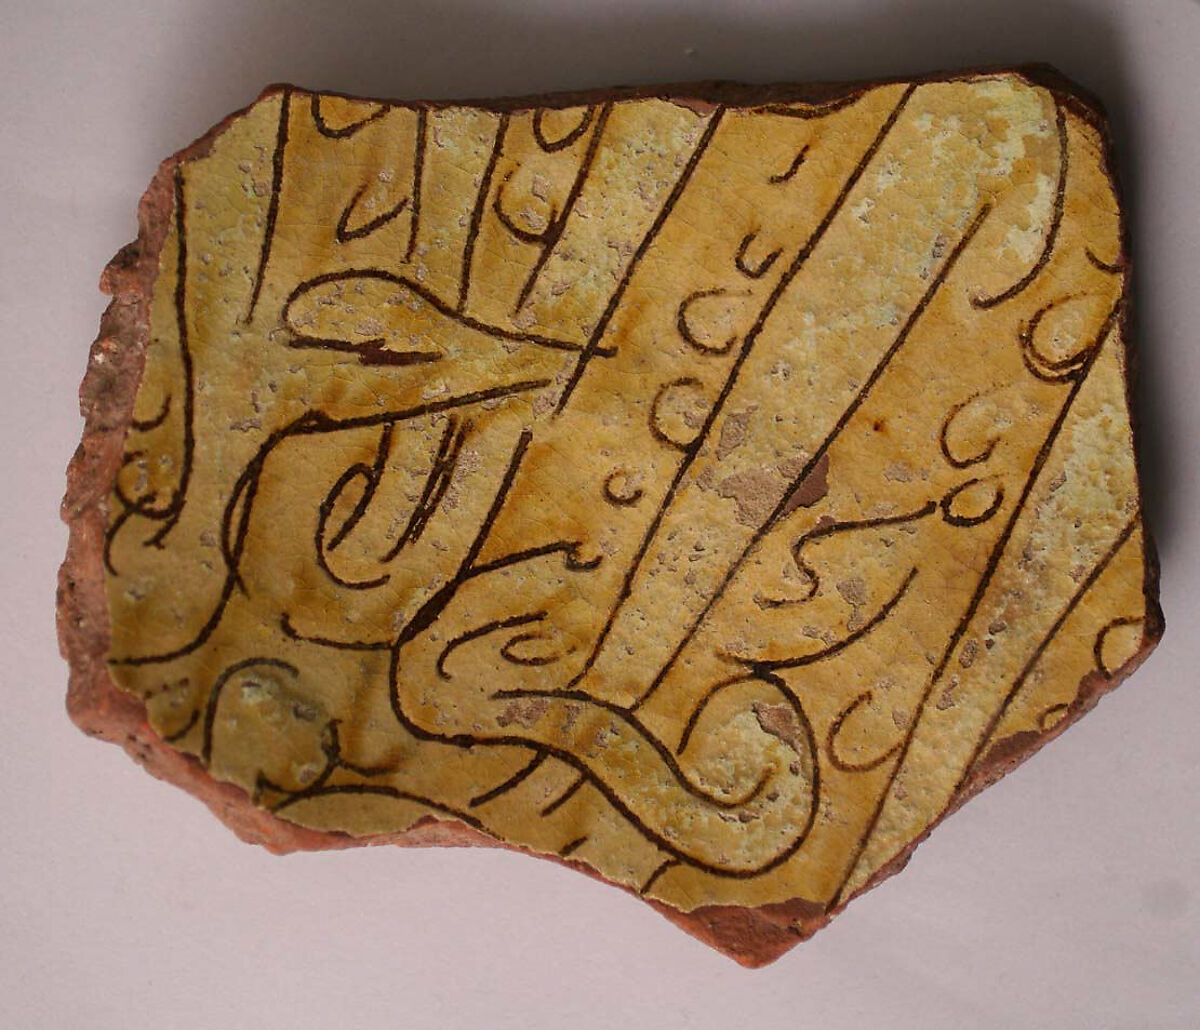 Ceramic Fragment, Earthenware; incised decoration through white slip and coloring under transparent glaze. 